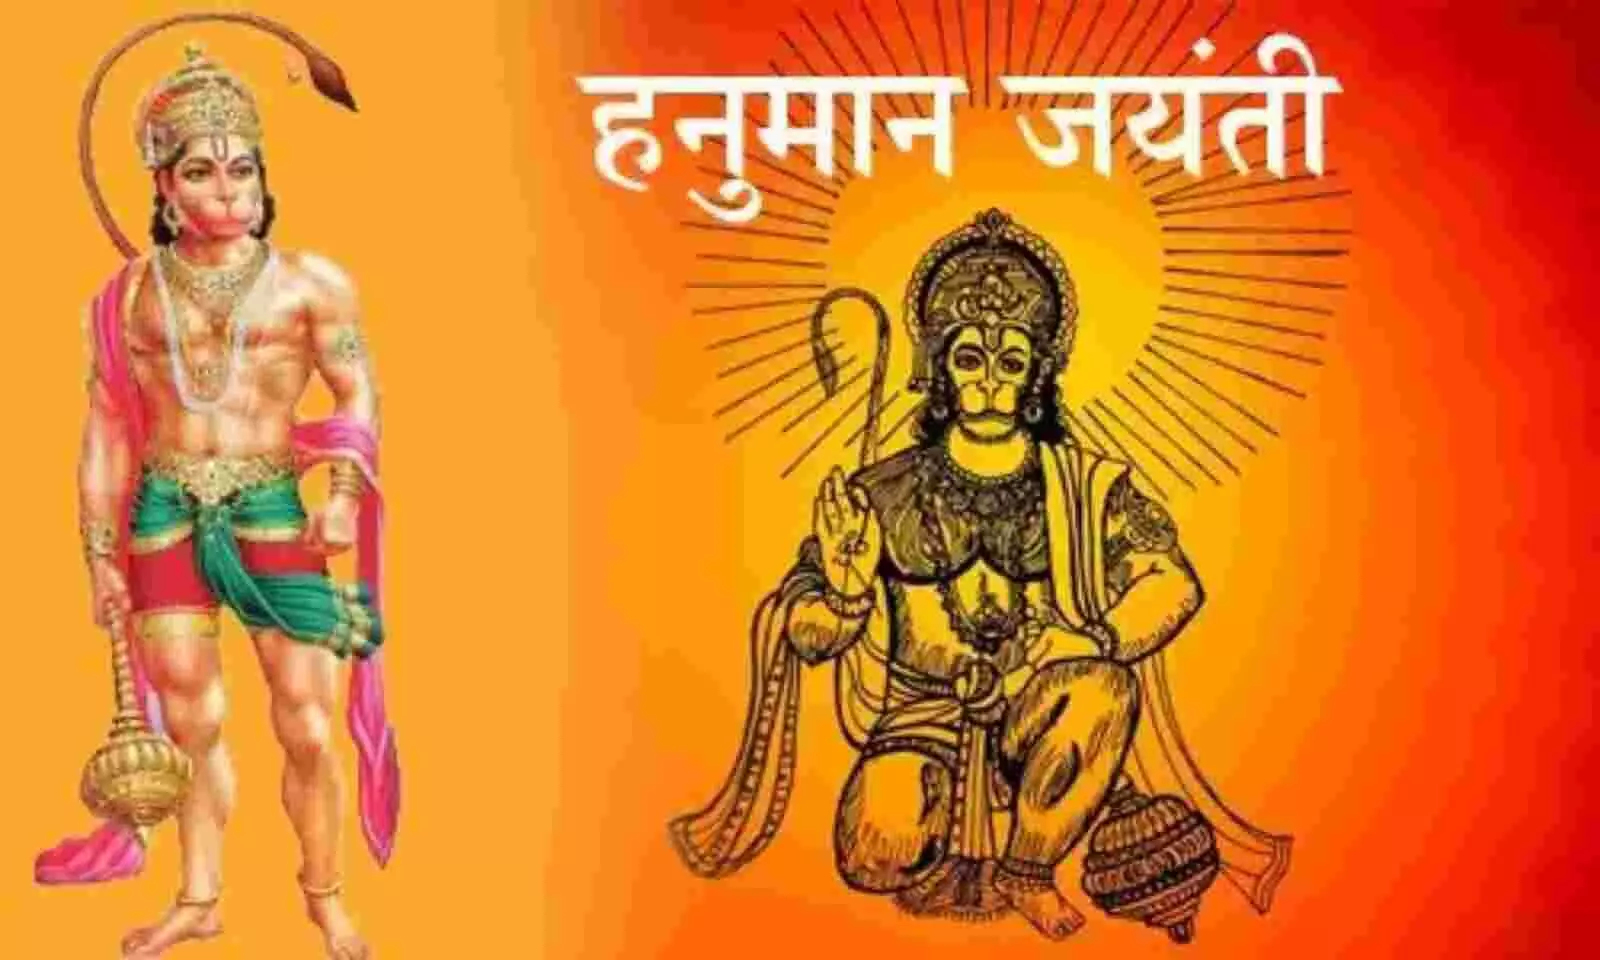 madhya pradesh bhopal police issue advisory for hanuman janmotsav